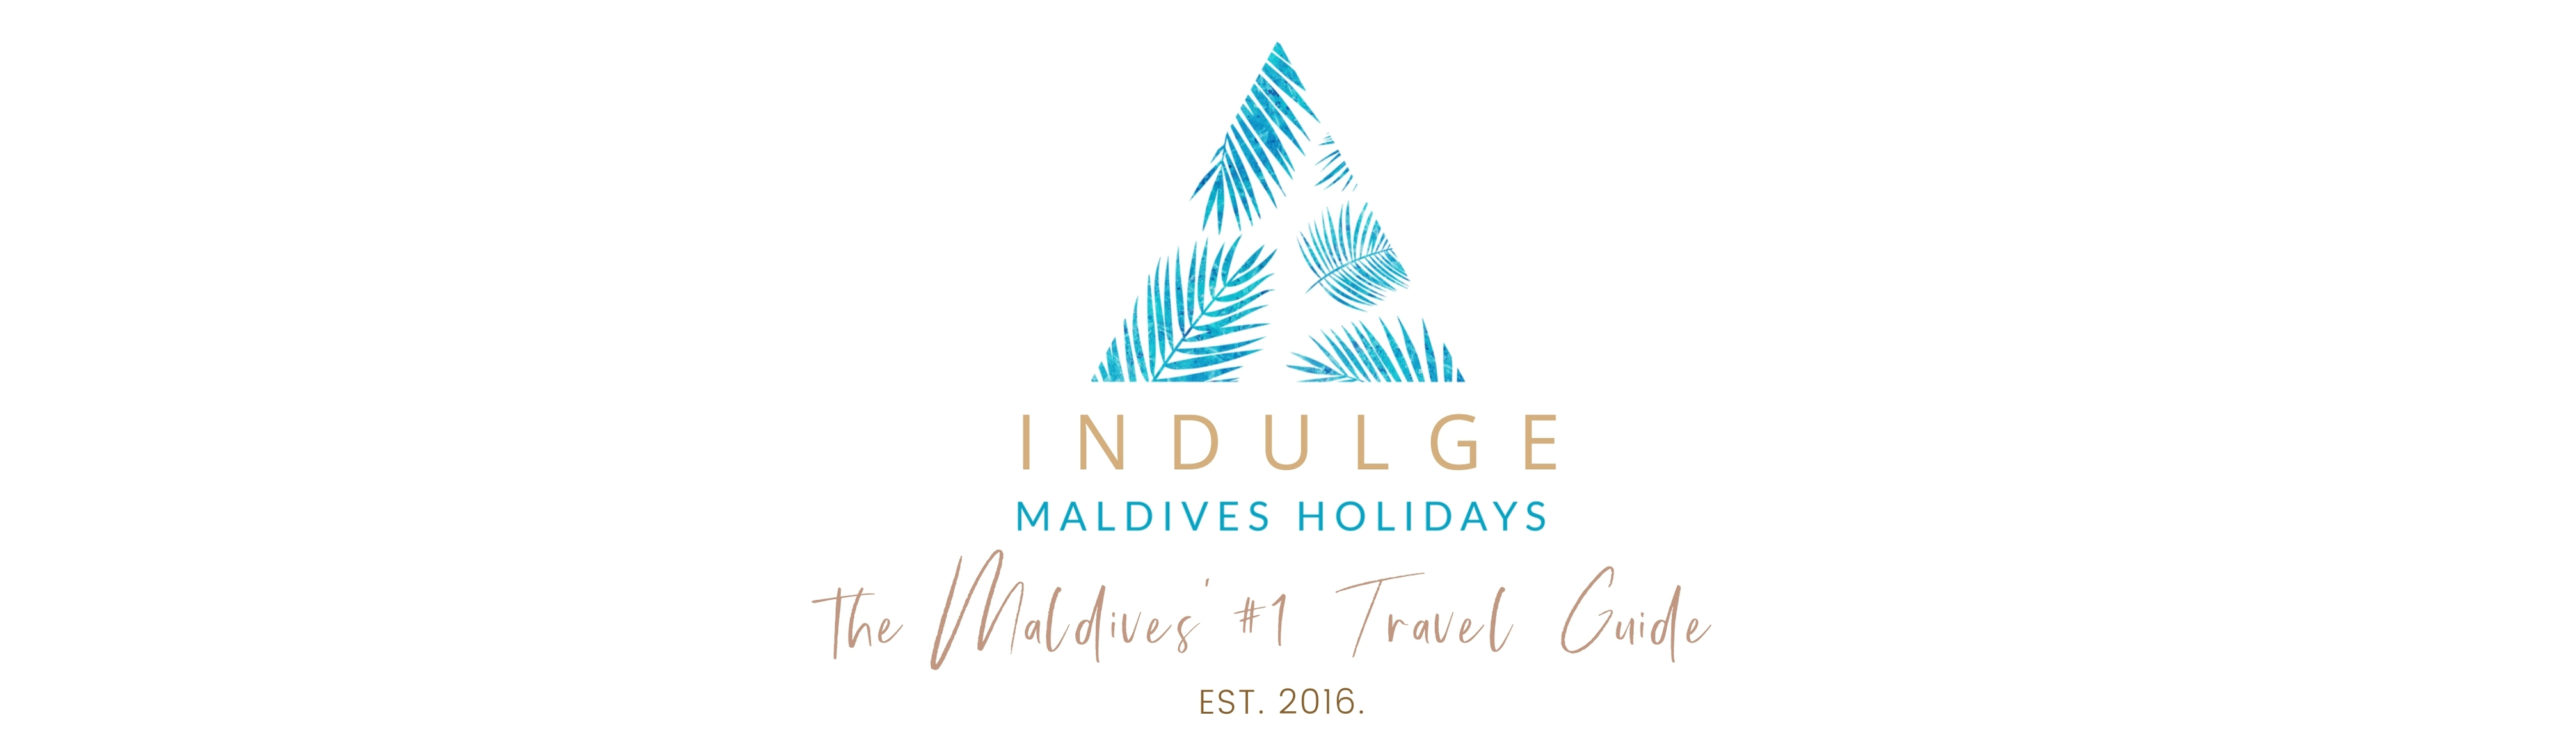 INDULGE MALDIVES